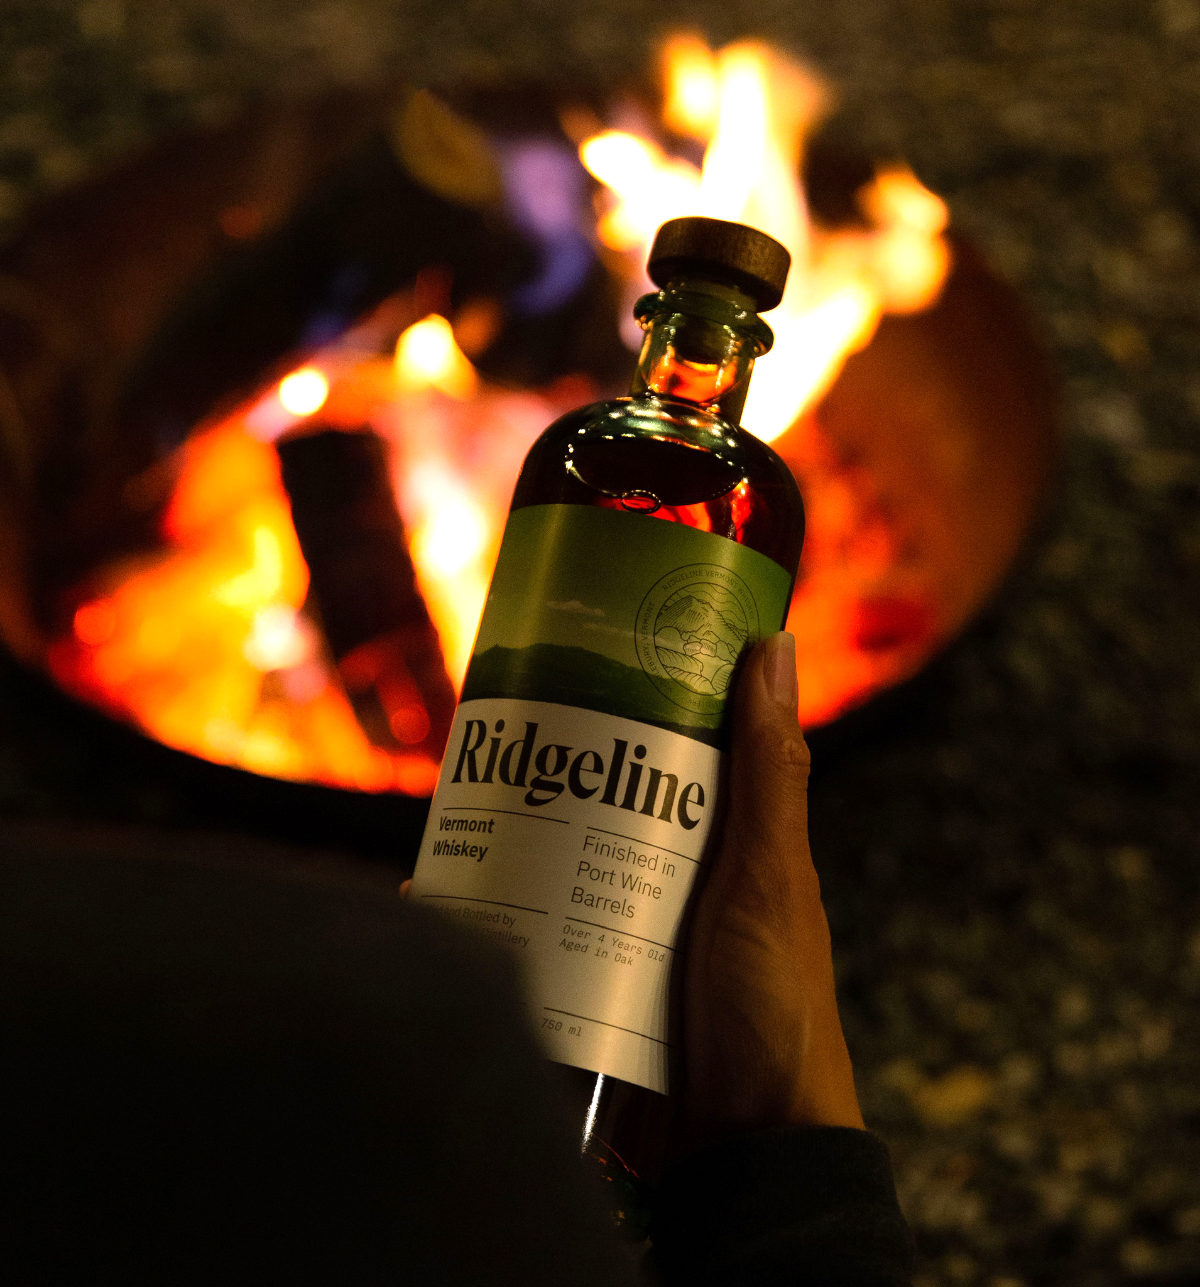 Ridgeline beside a campfire